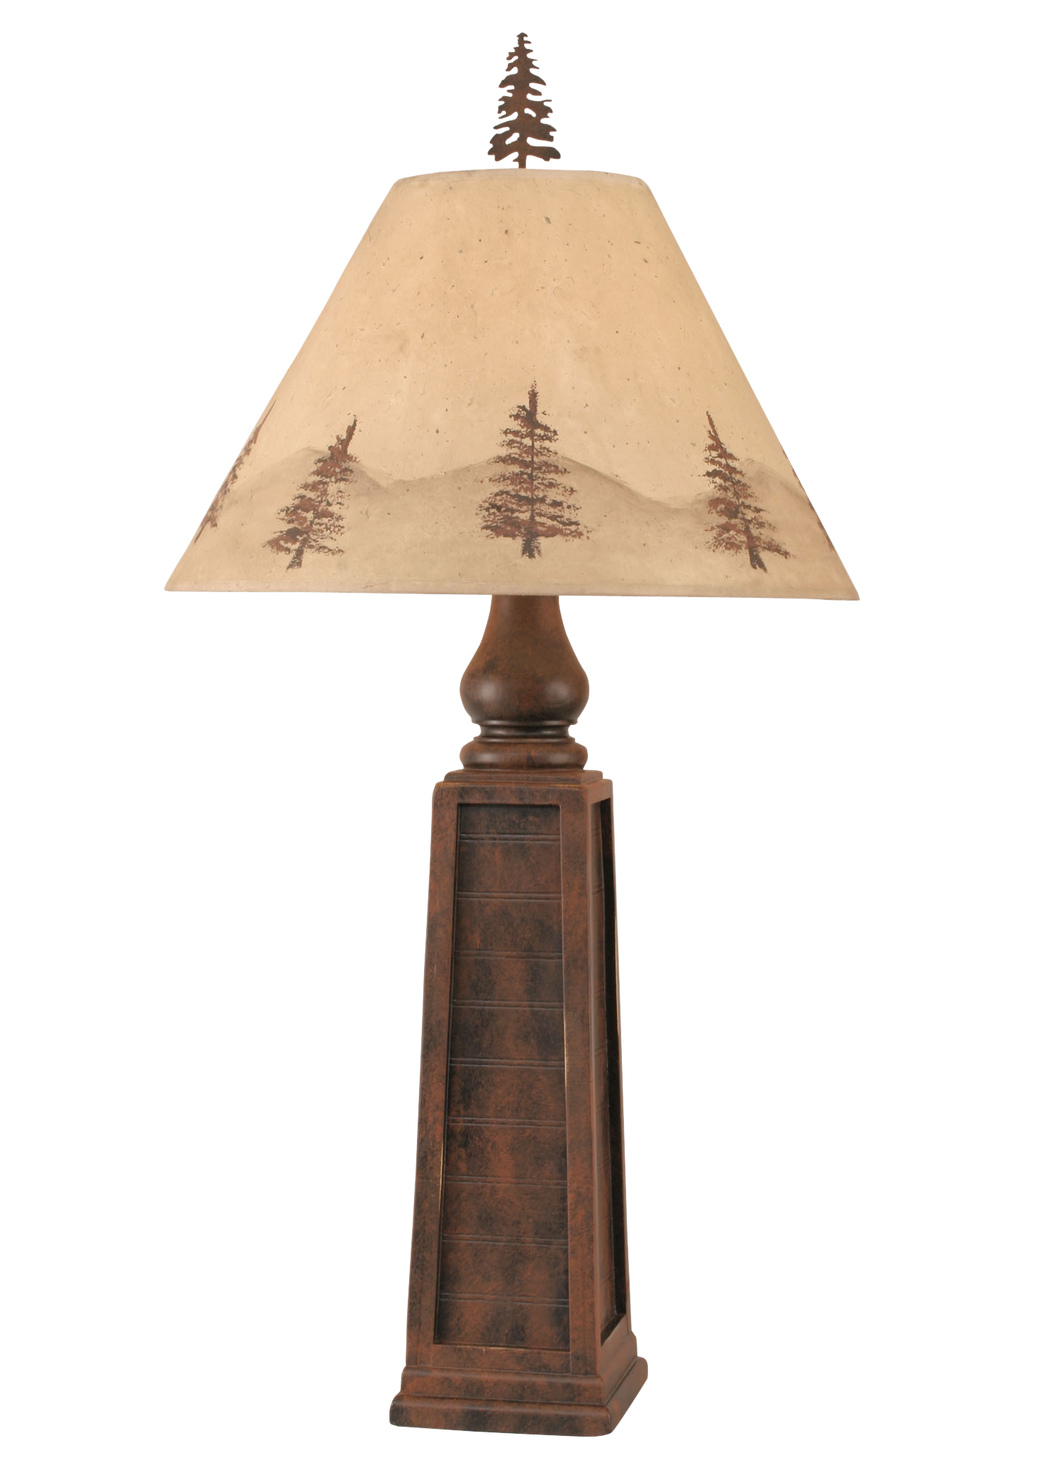 Rust Pyramid Table Lamp w/ Pine Tree Shade